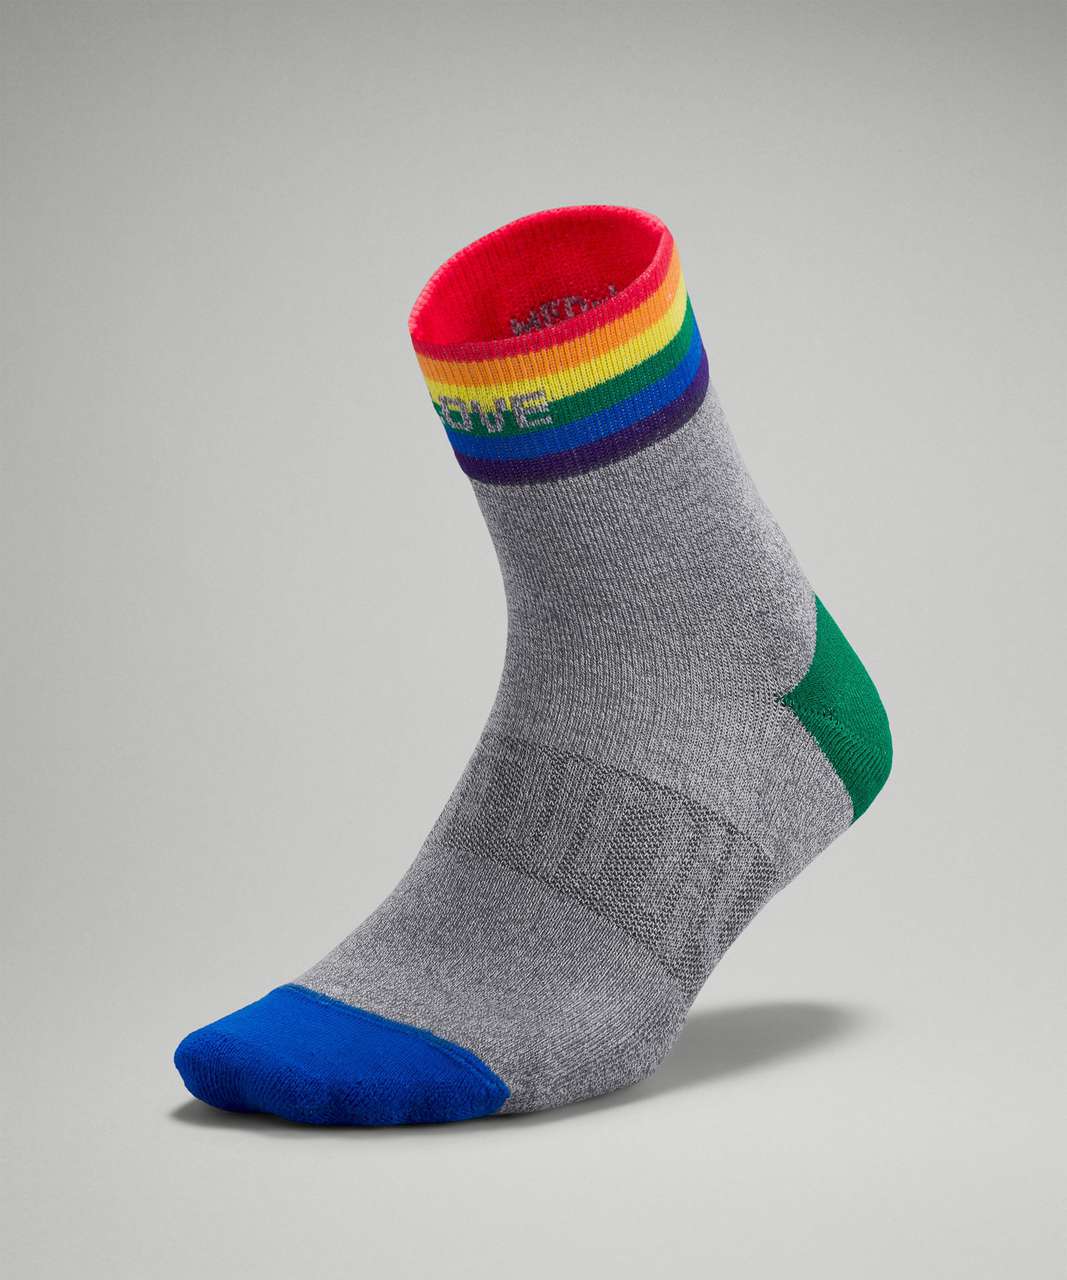 Rainbow.me – Ledger Support